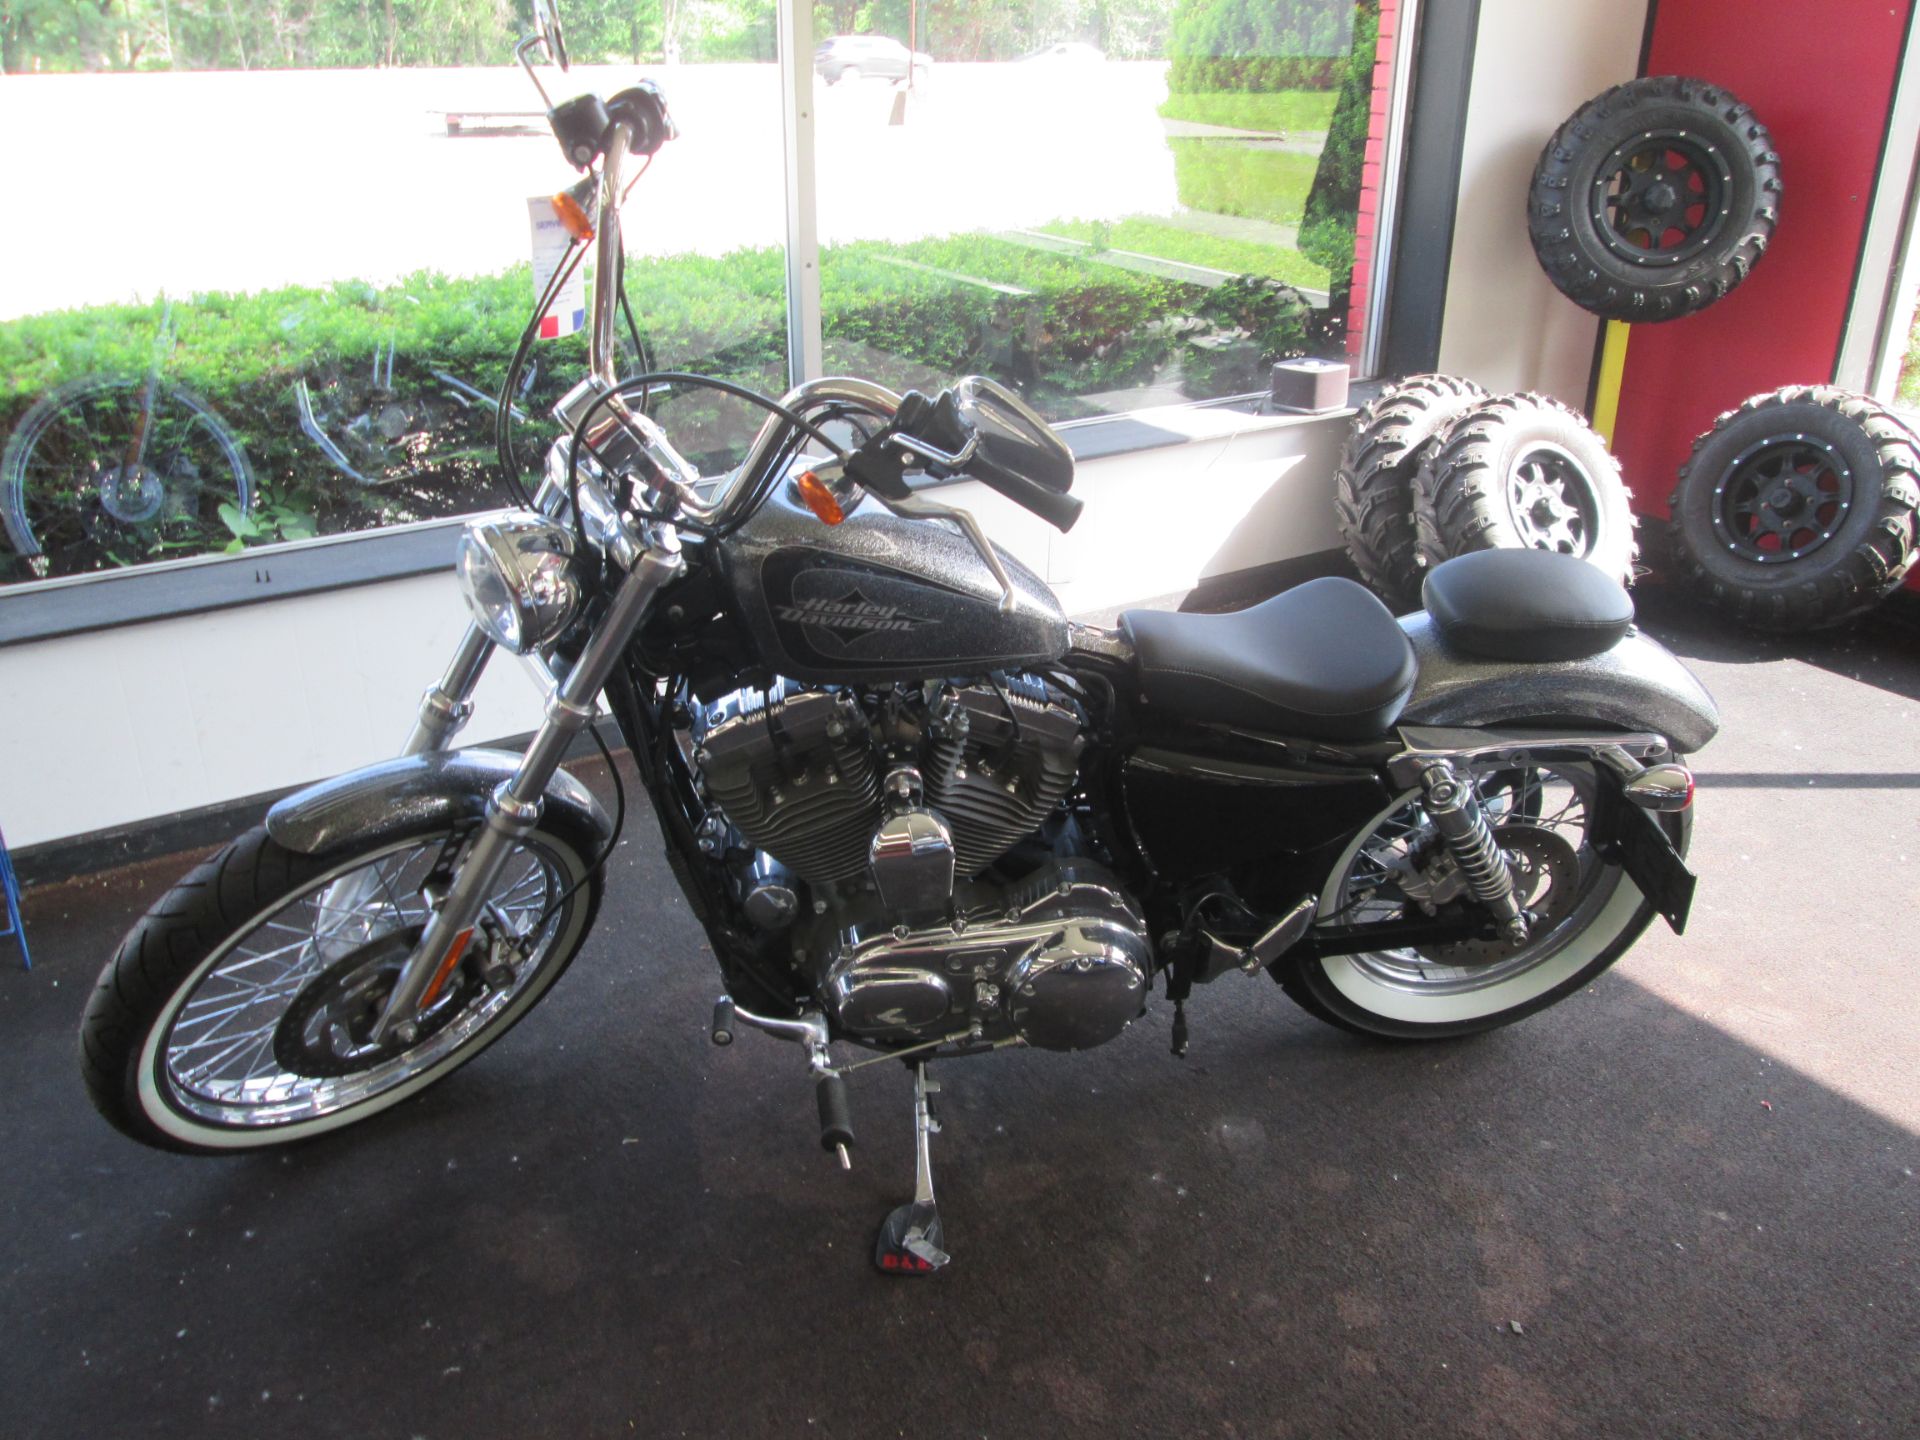 2014 Harley-Davidson Sportster® Seventy-Two® in Valparaiso, Indiana - Photo 3